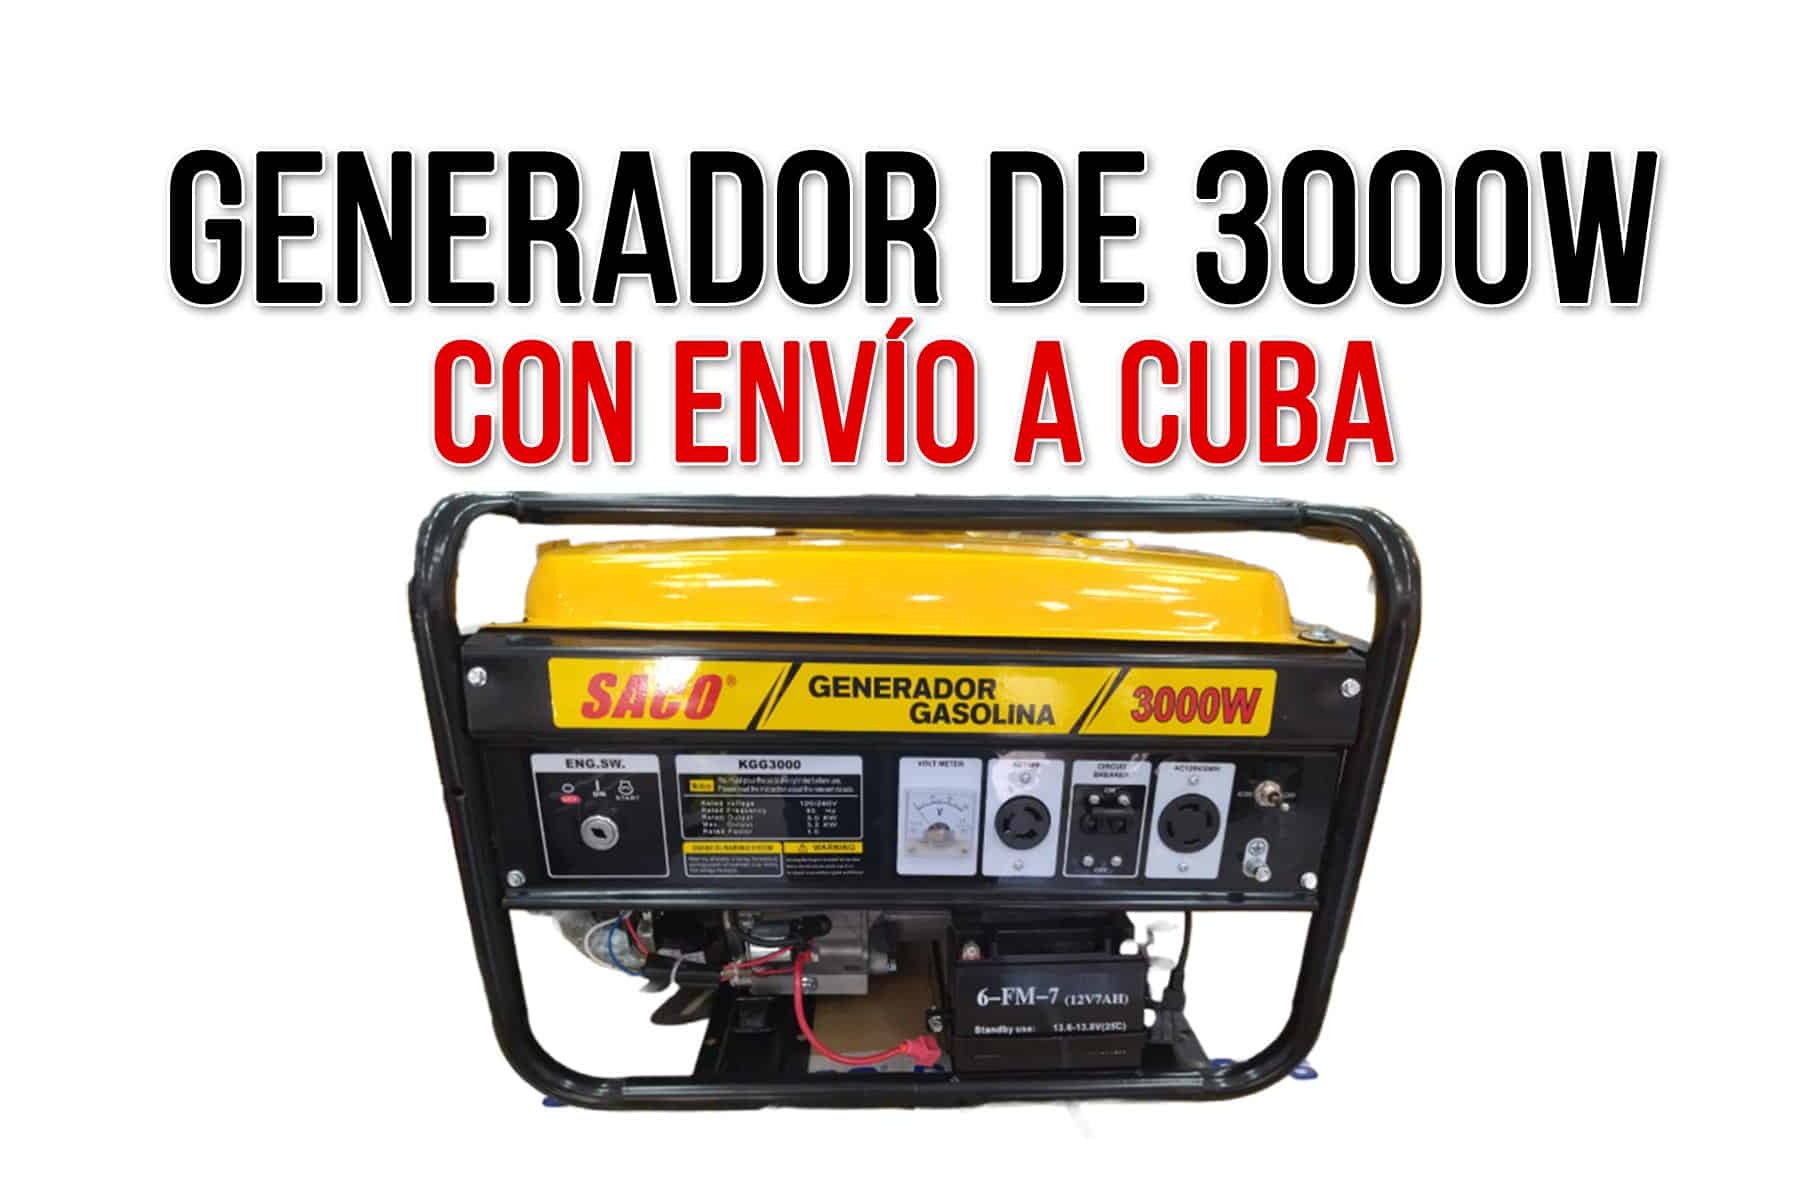 Planta Eléctrica SACO de 3000w para Enviar a Cuba